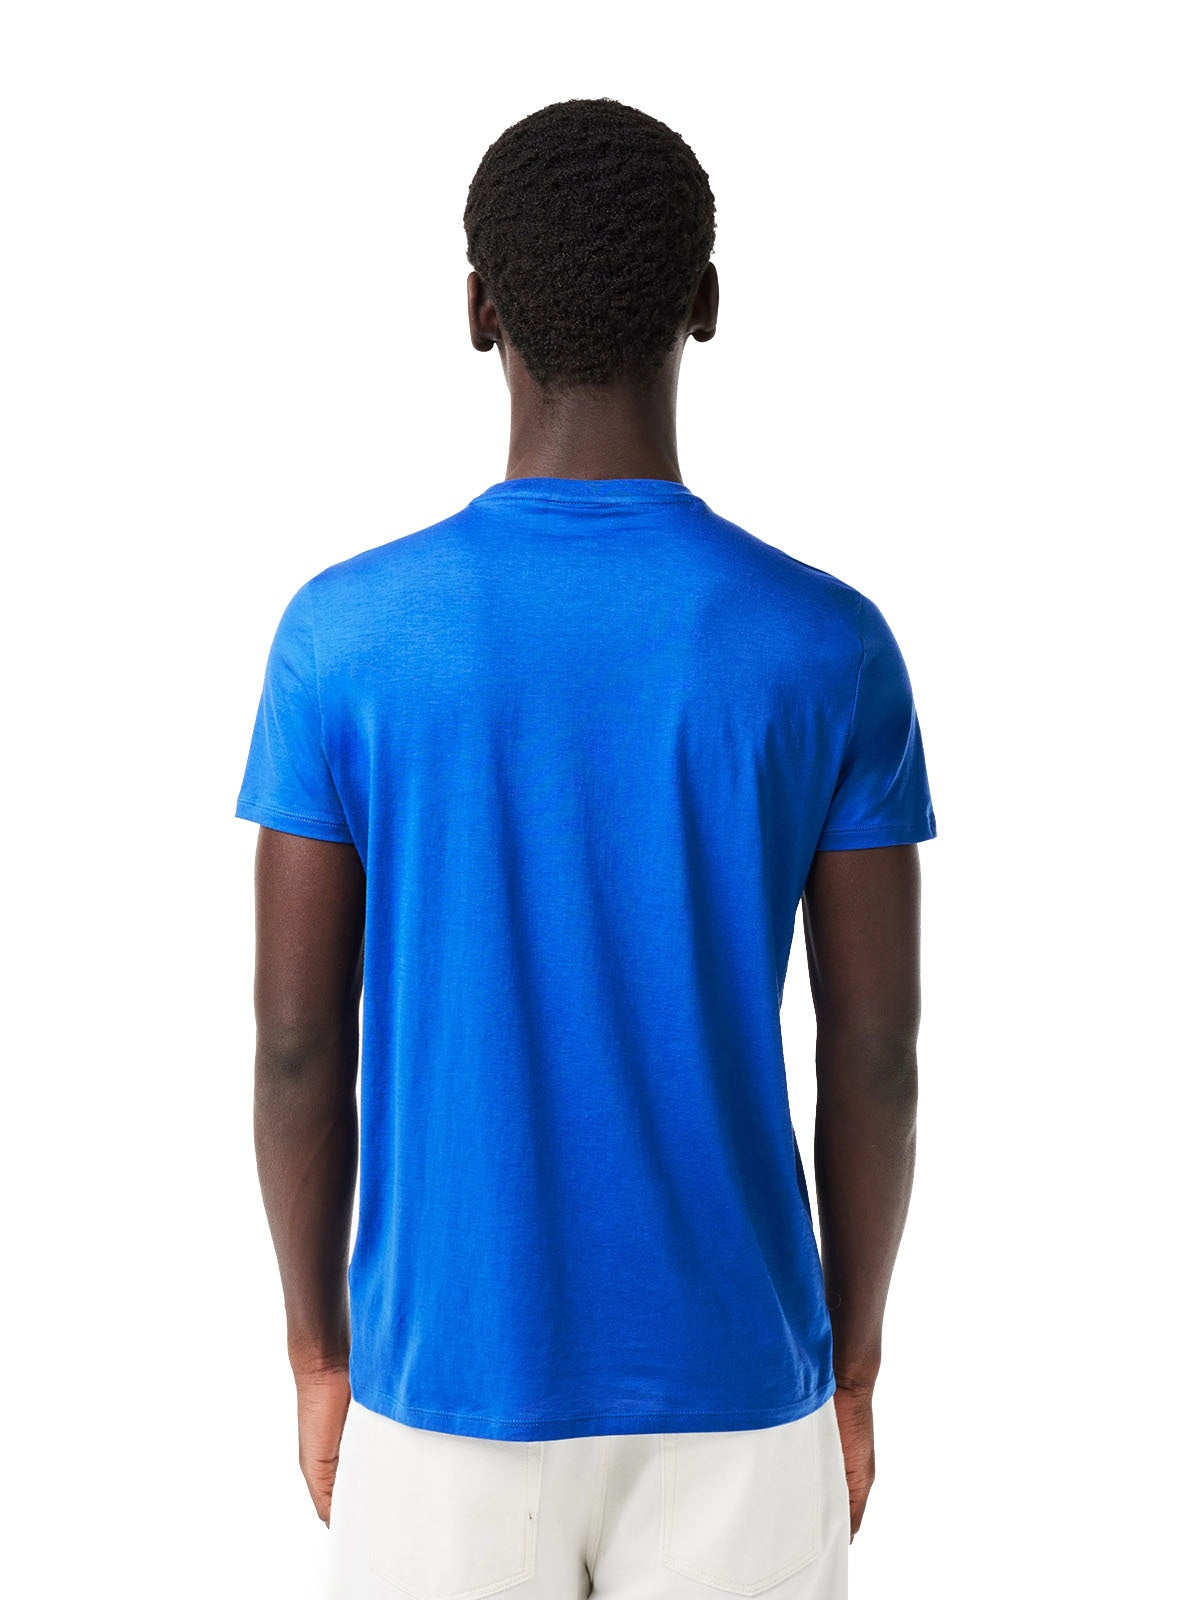 T-shirt Uomo Lacoste - T-Shirt A Girocollo In Jersey Di Cotone Pima - Blu